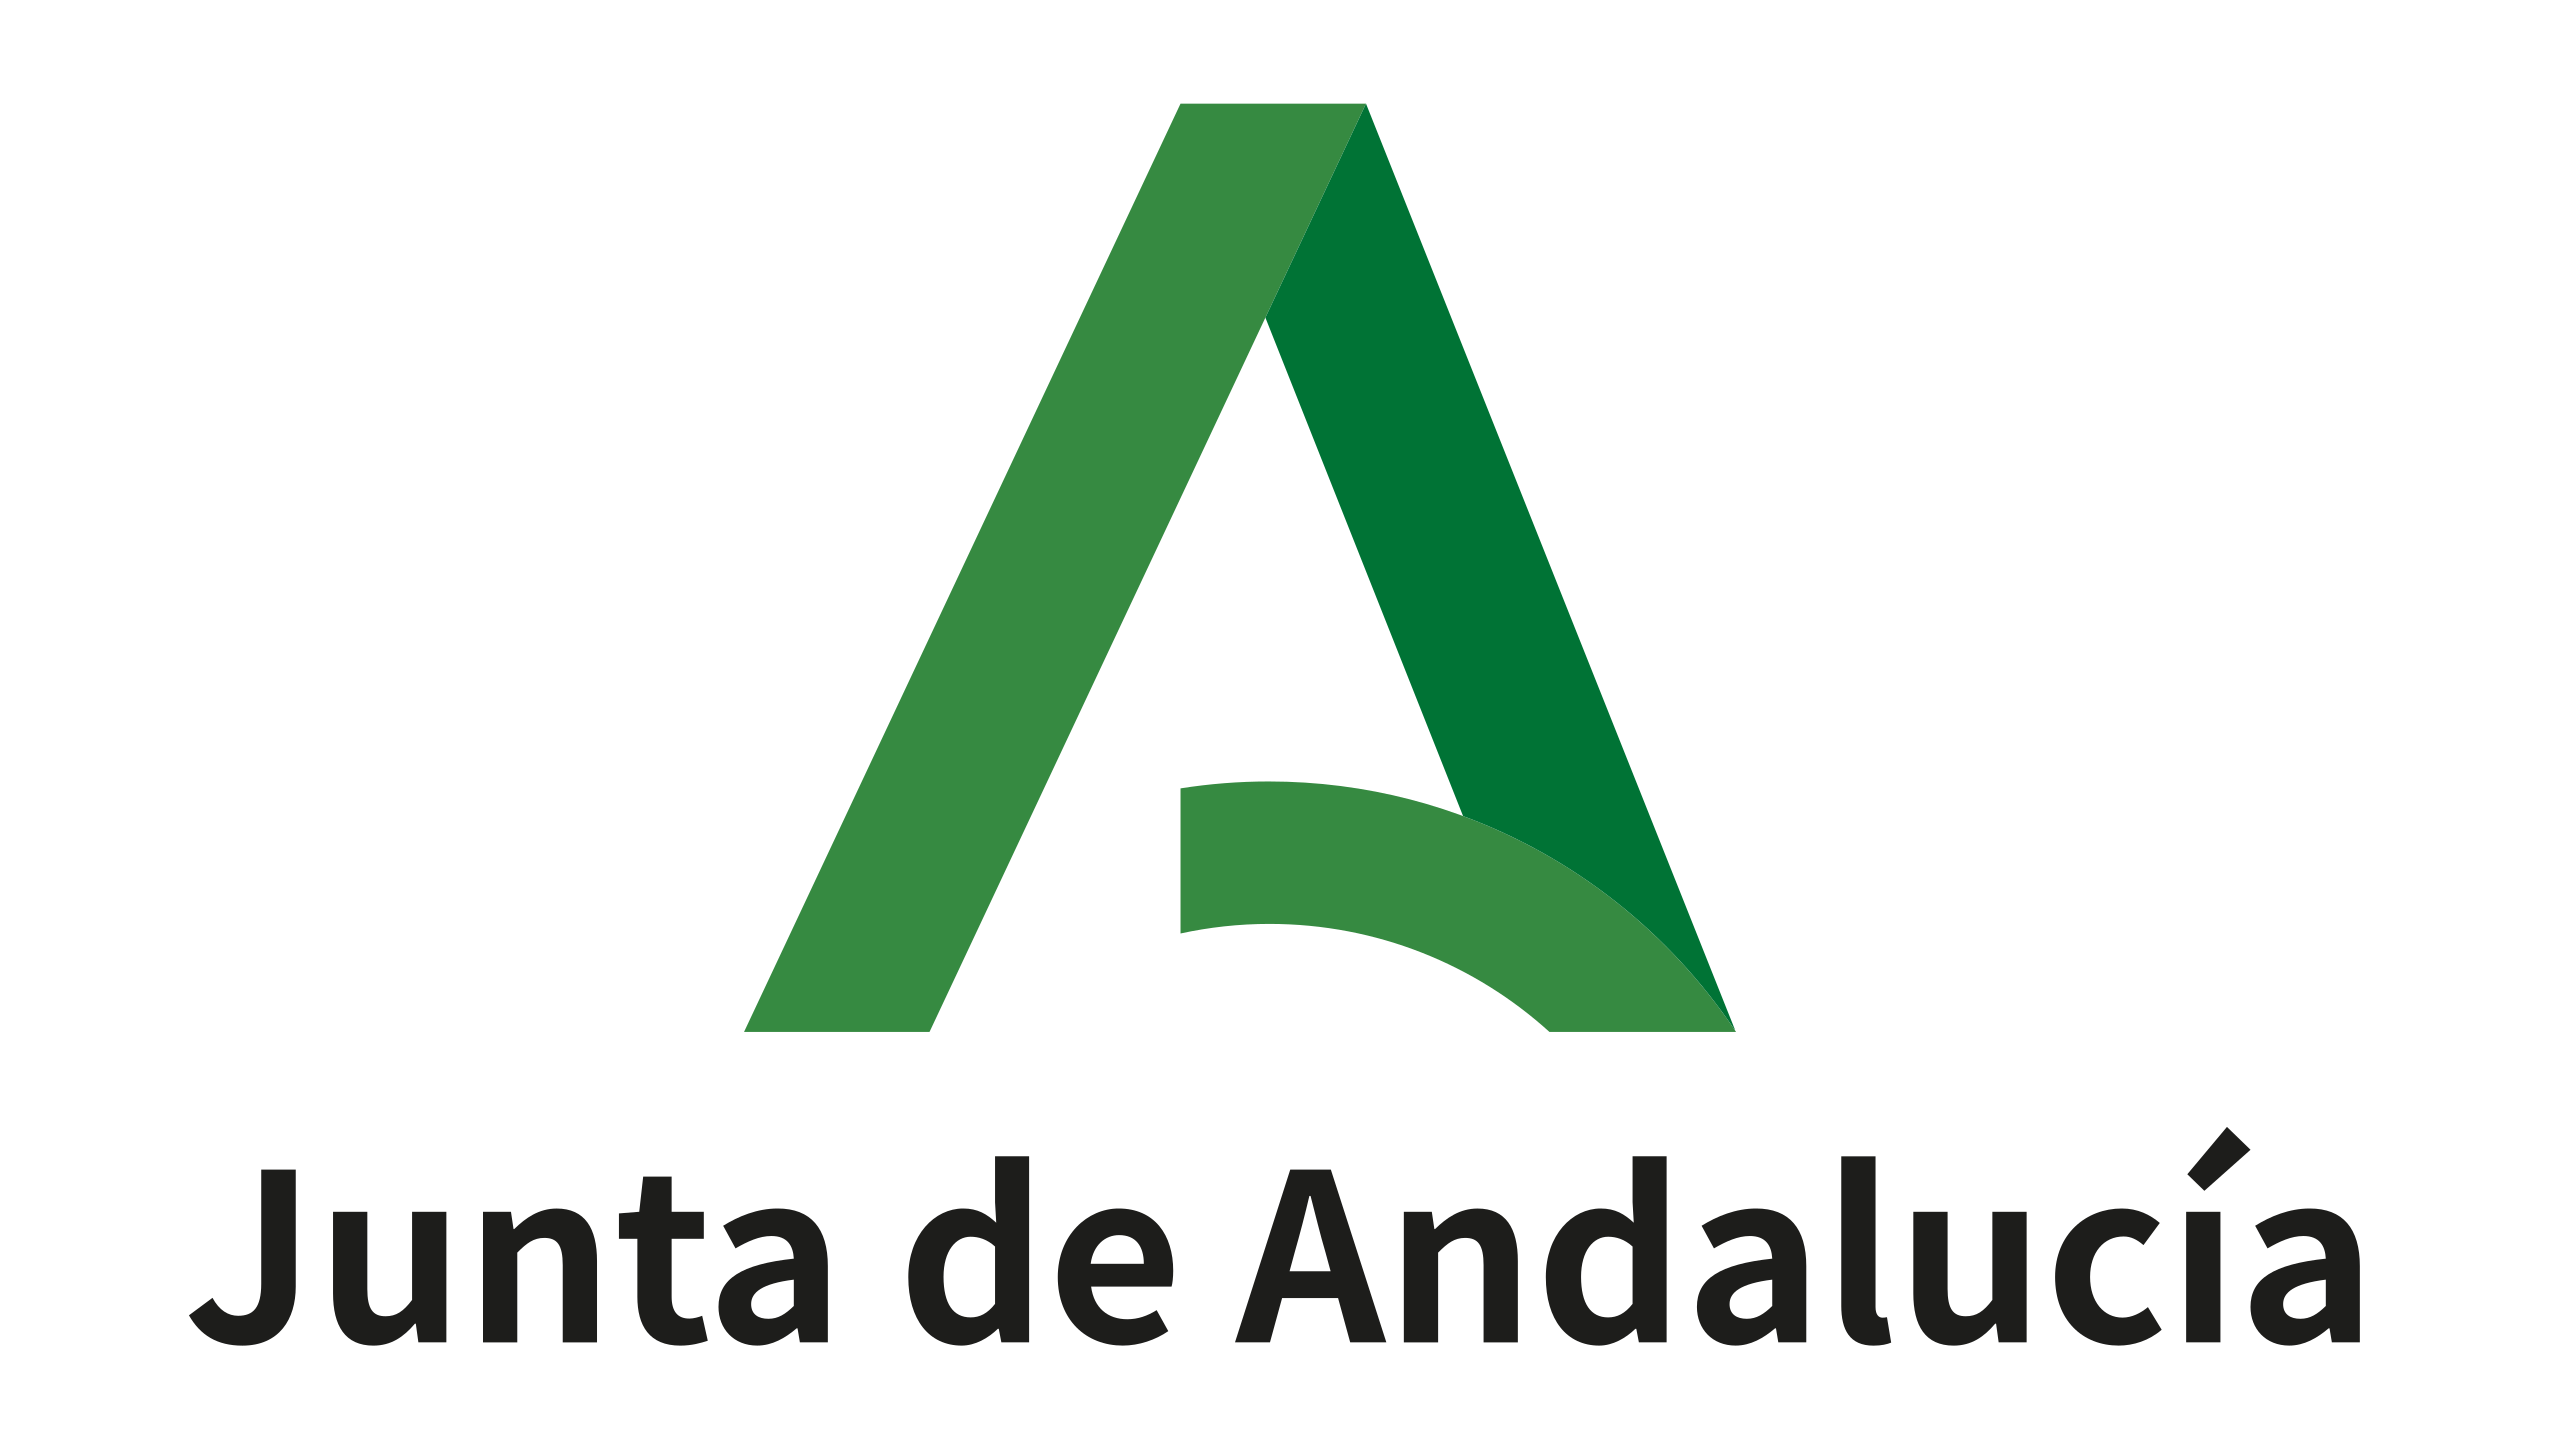 2560px Junta de Andalucia 2020 logo.svg